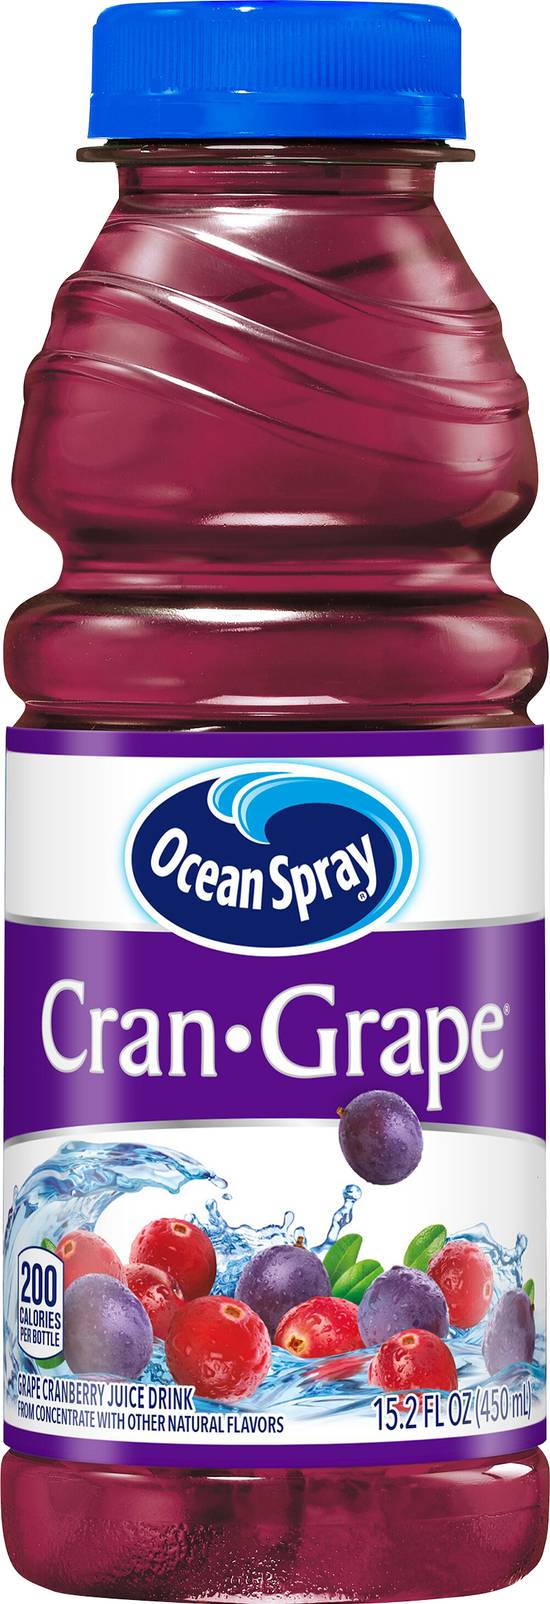 Ocean Spray Juice Drink (15.2 fl oz)(grape cranberry)